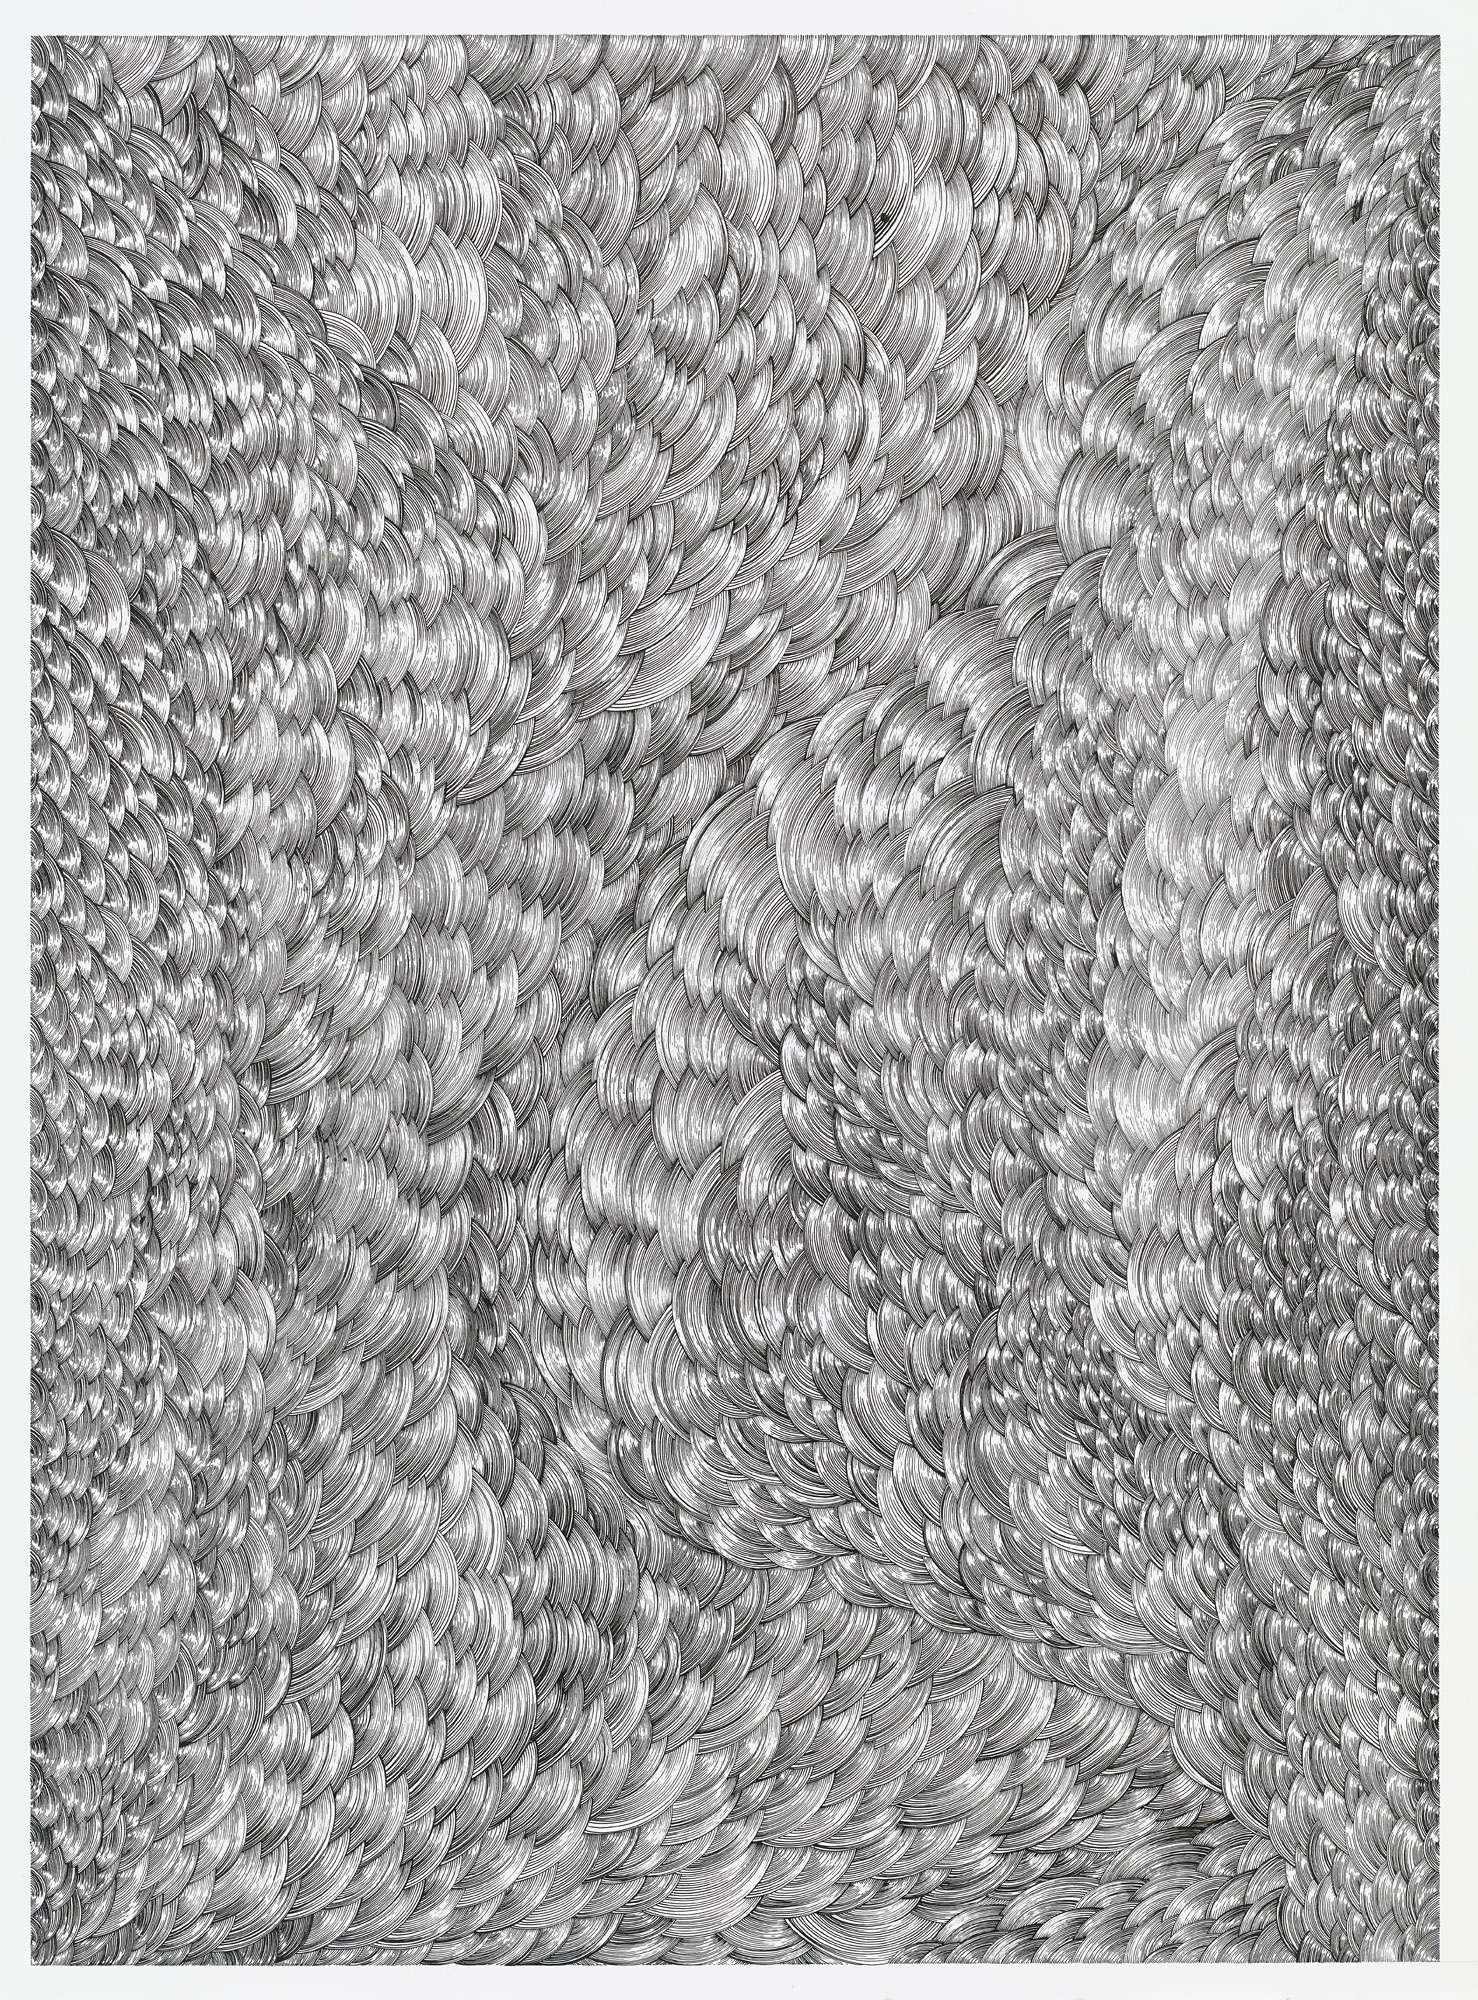 BK P158 | diptychon part A | untitled | acrylic on paper | 200x170cm | 2014 | collection kunstwerk Alison & Peter W. Klein 